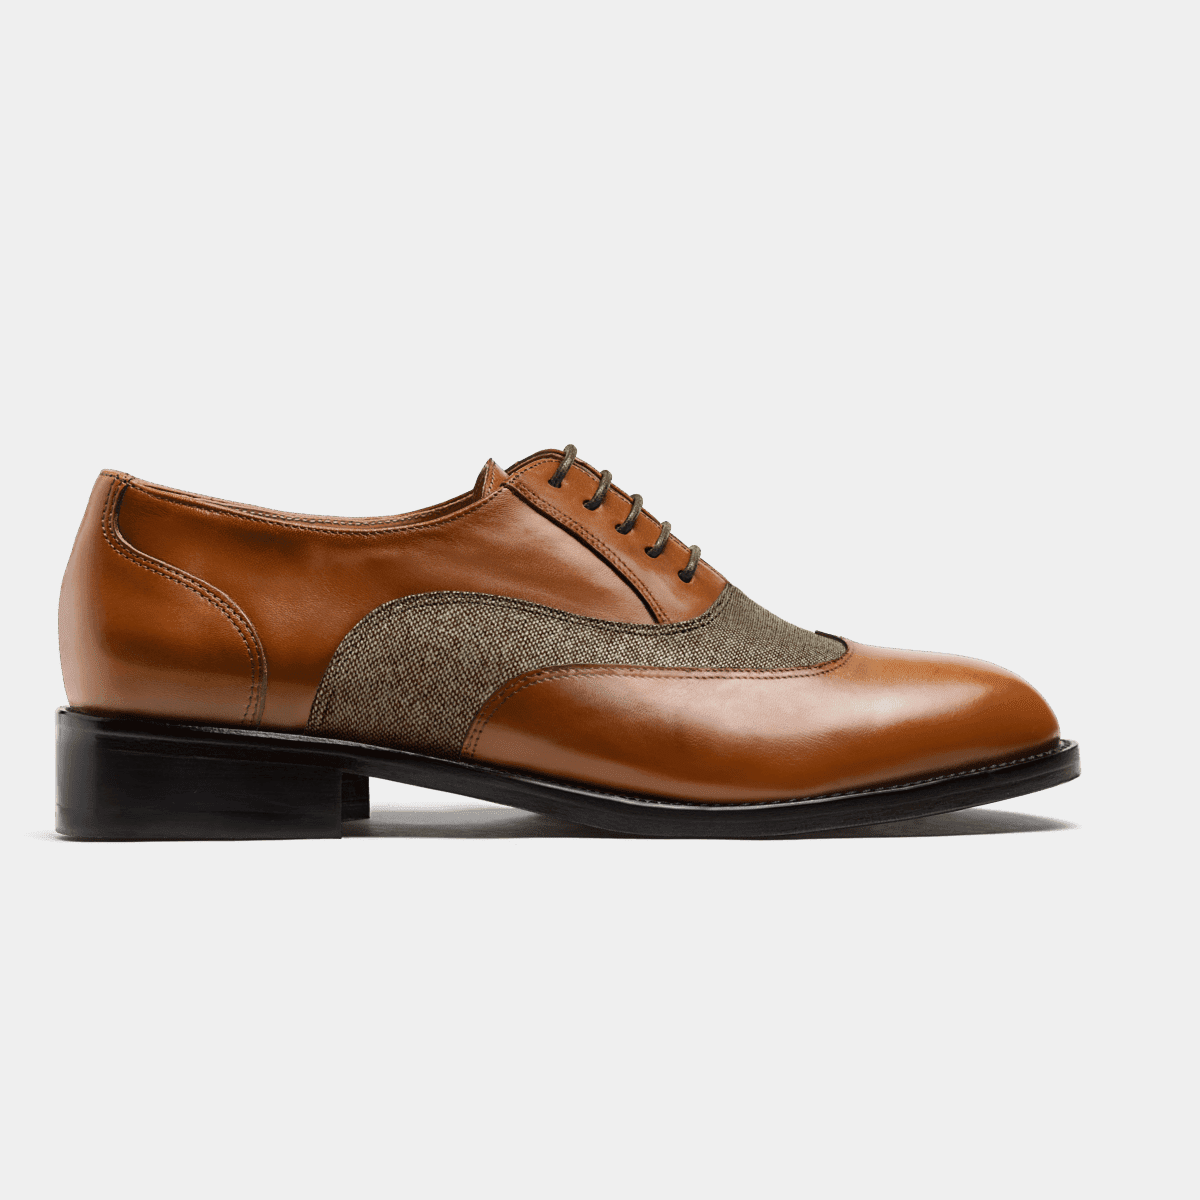 Wingtip Oxford shoes - brown leather & tweed | Sumissura